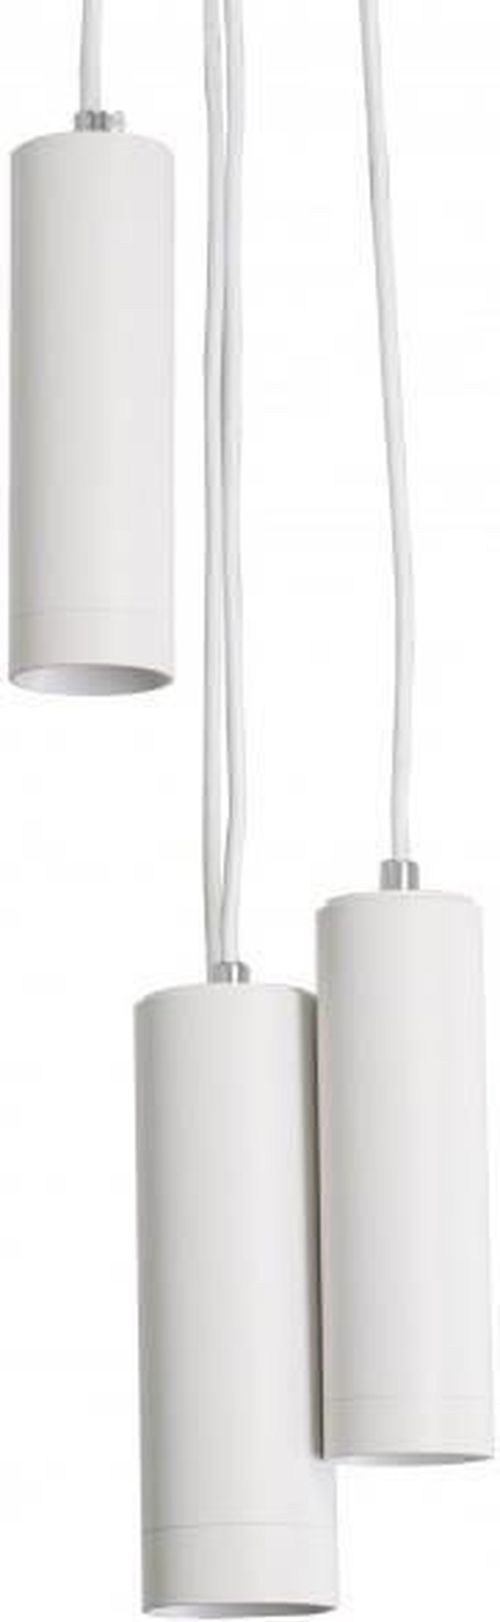 купить Освещение для помещений LED Market BIG PLATE Round Pedant Lamp LM-PC3003- 3*7W+1*12W 3000K White в Кишинёве 